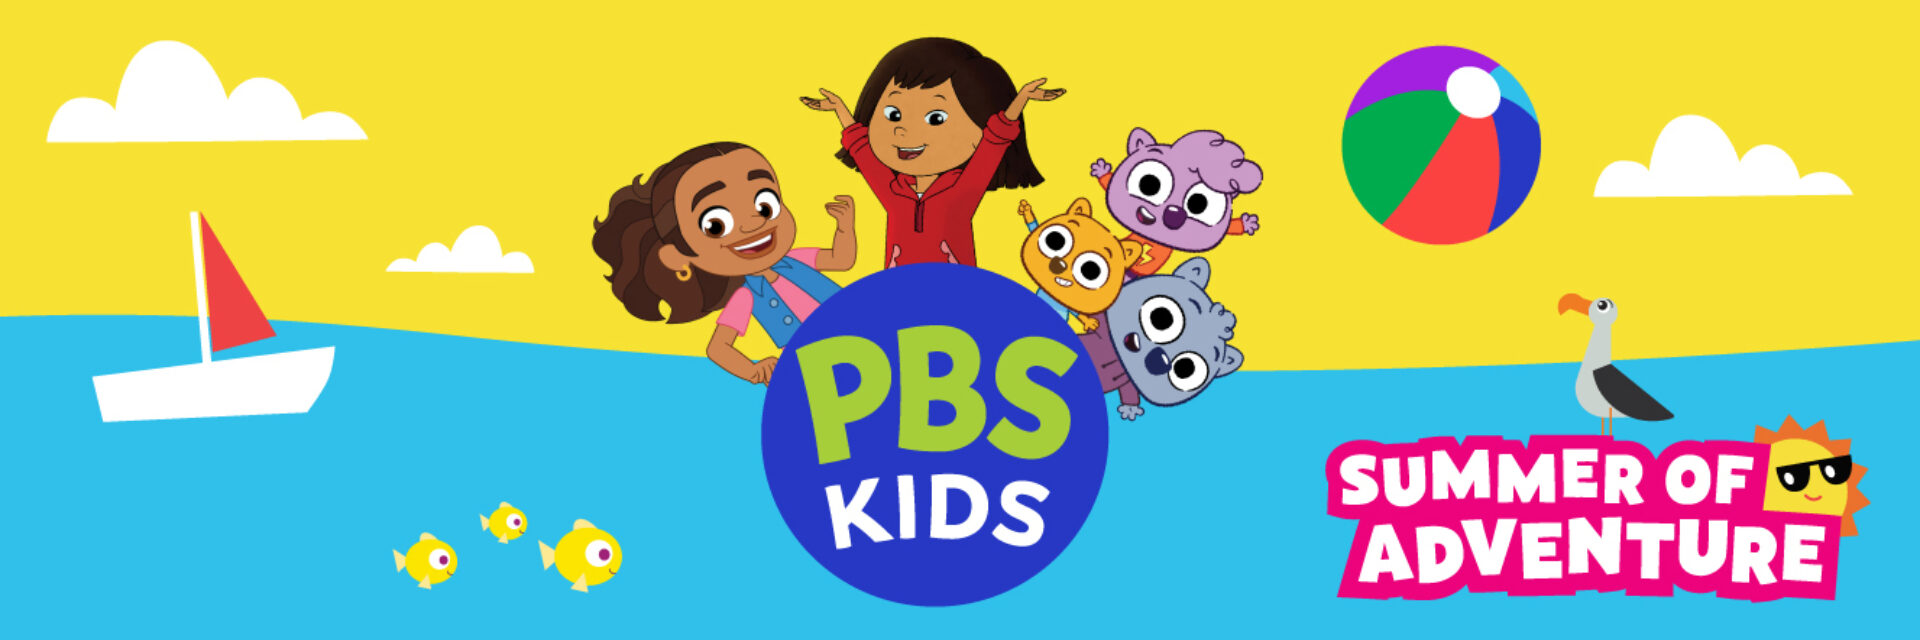 Summer of Adventures PBS KIDS